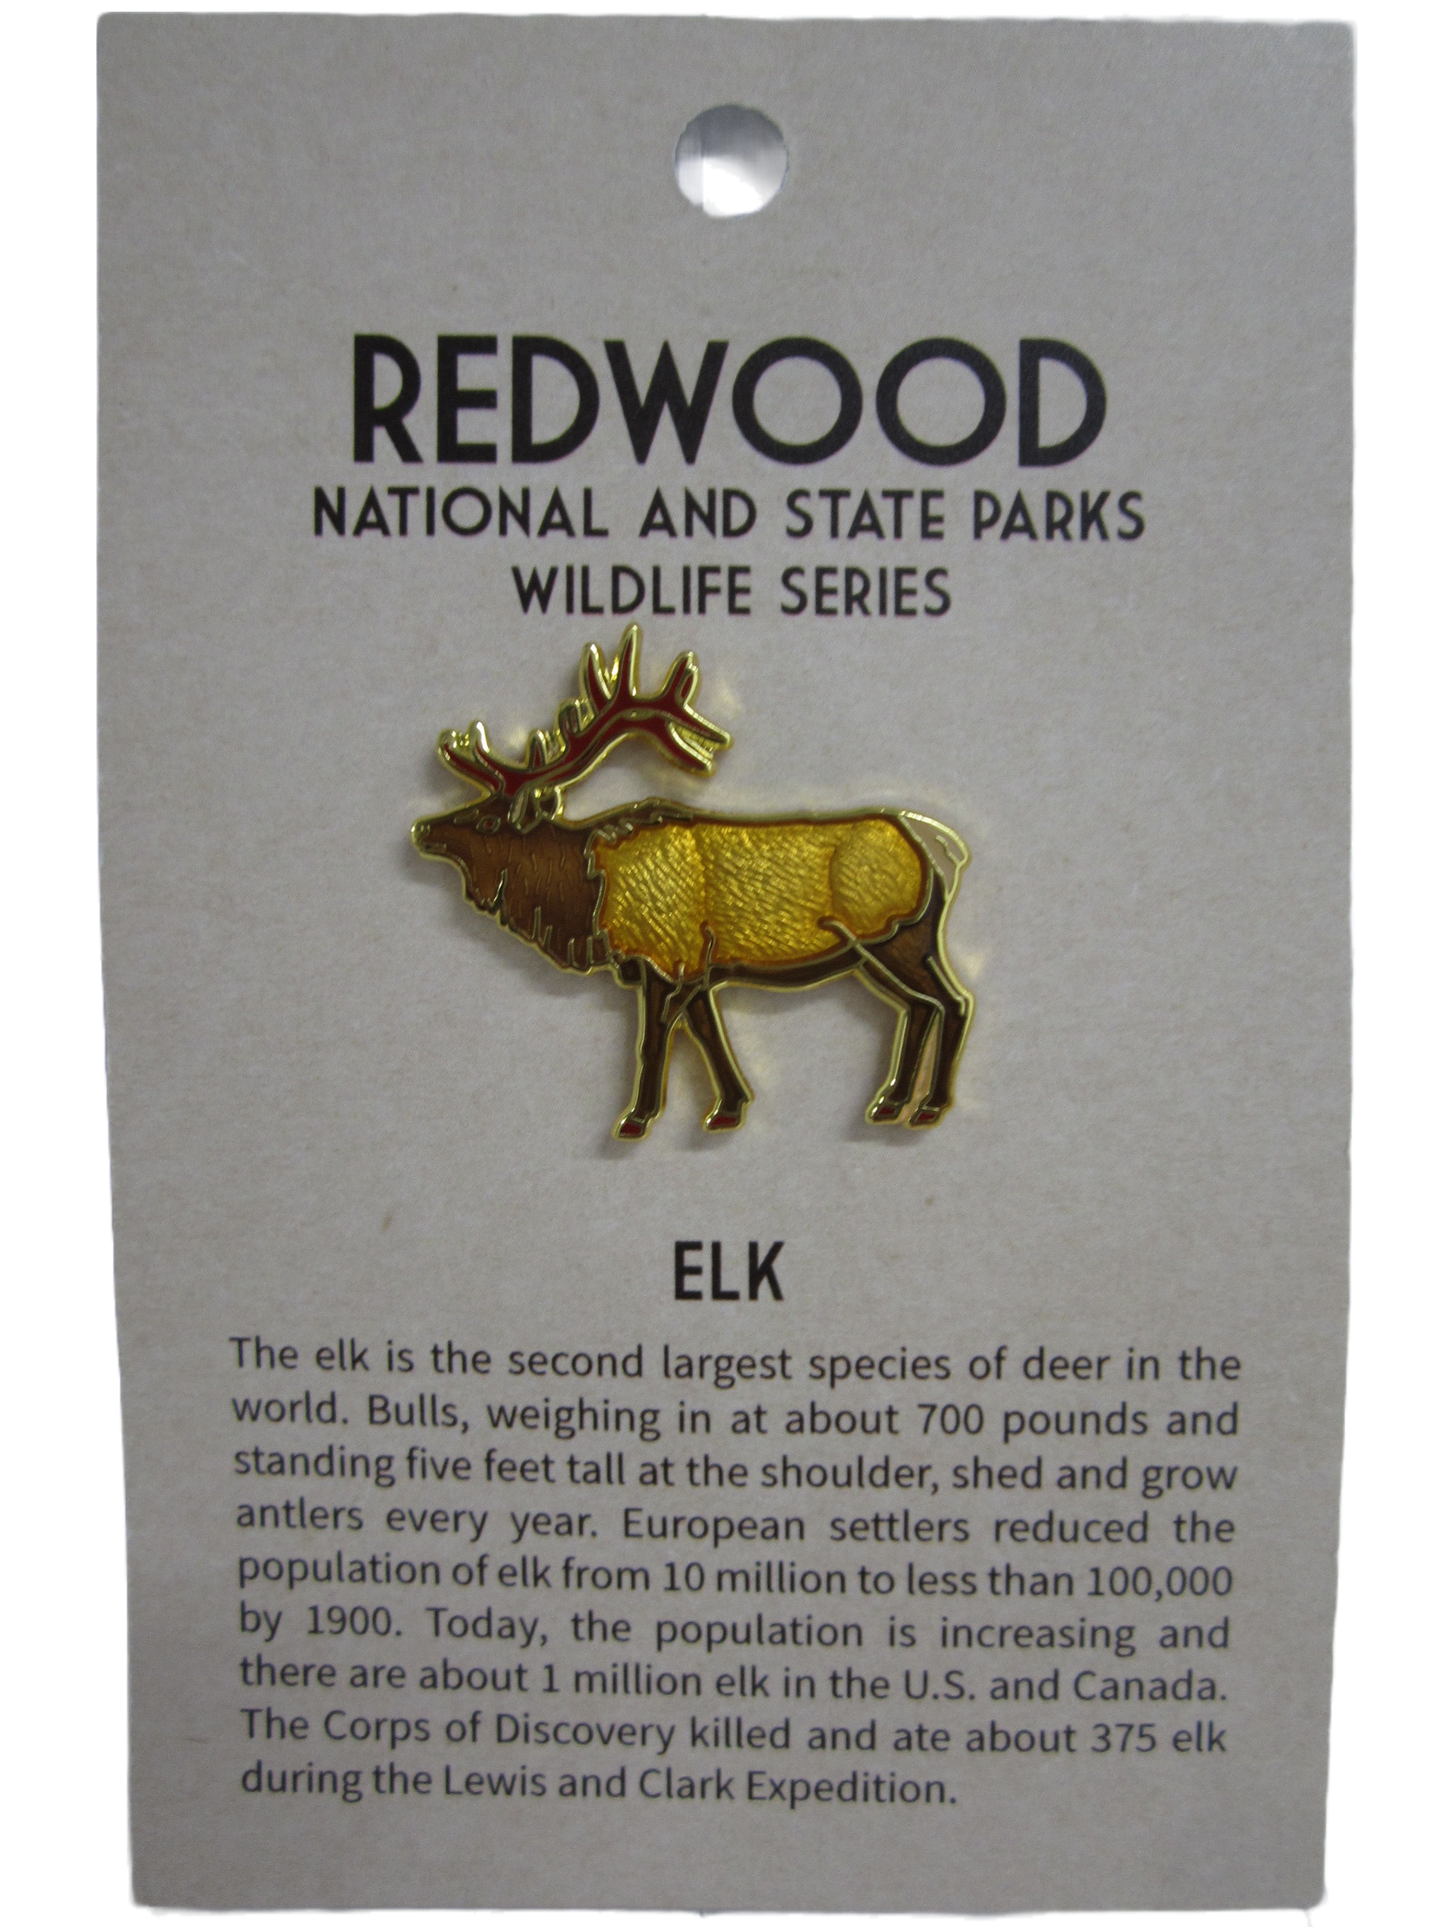 Redwood National & Stgate Parks Wildlife Series Elk Collector's Pin